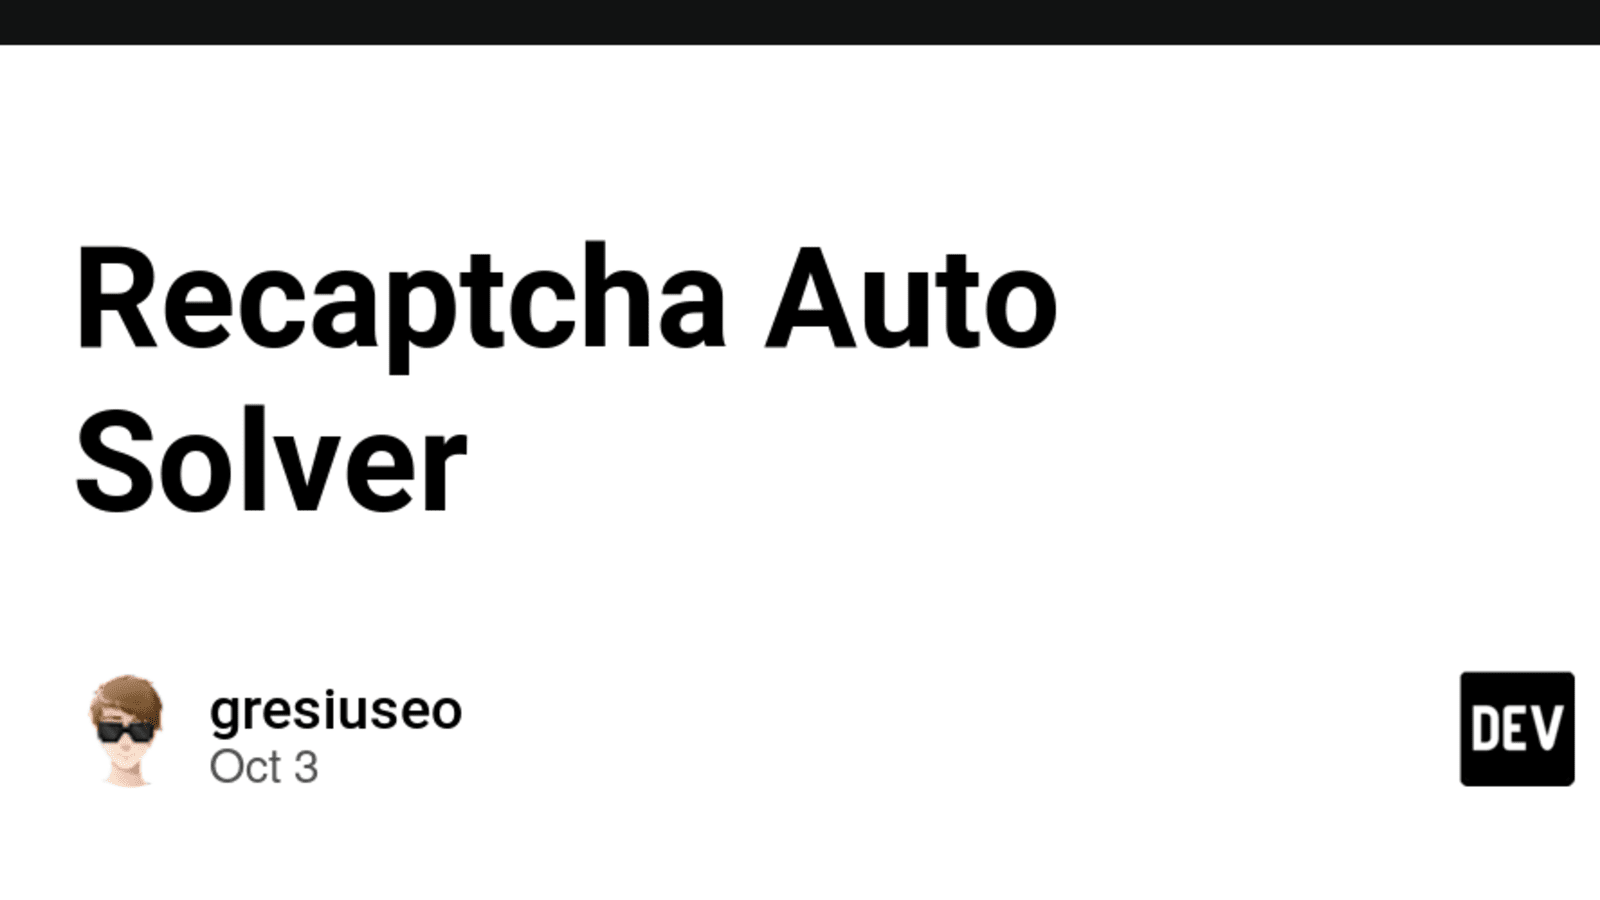 Buster Captcha Solver For Humans, Auto Captcha Solver, Solve Captcha  Automatically